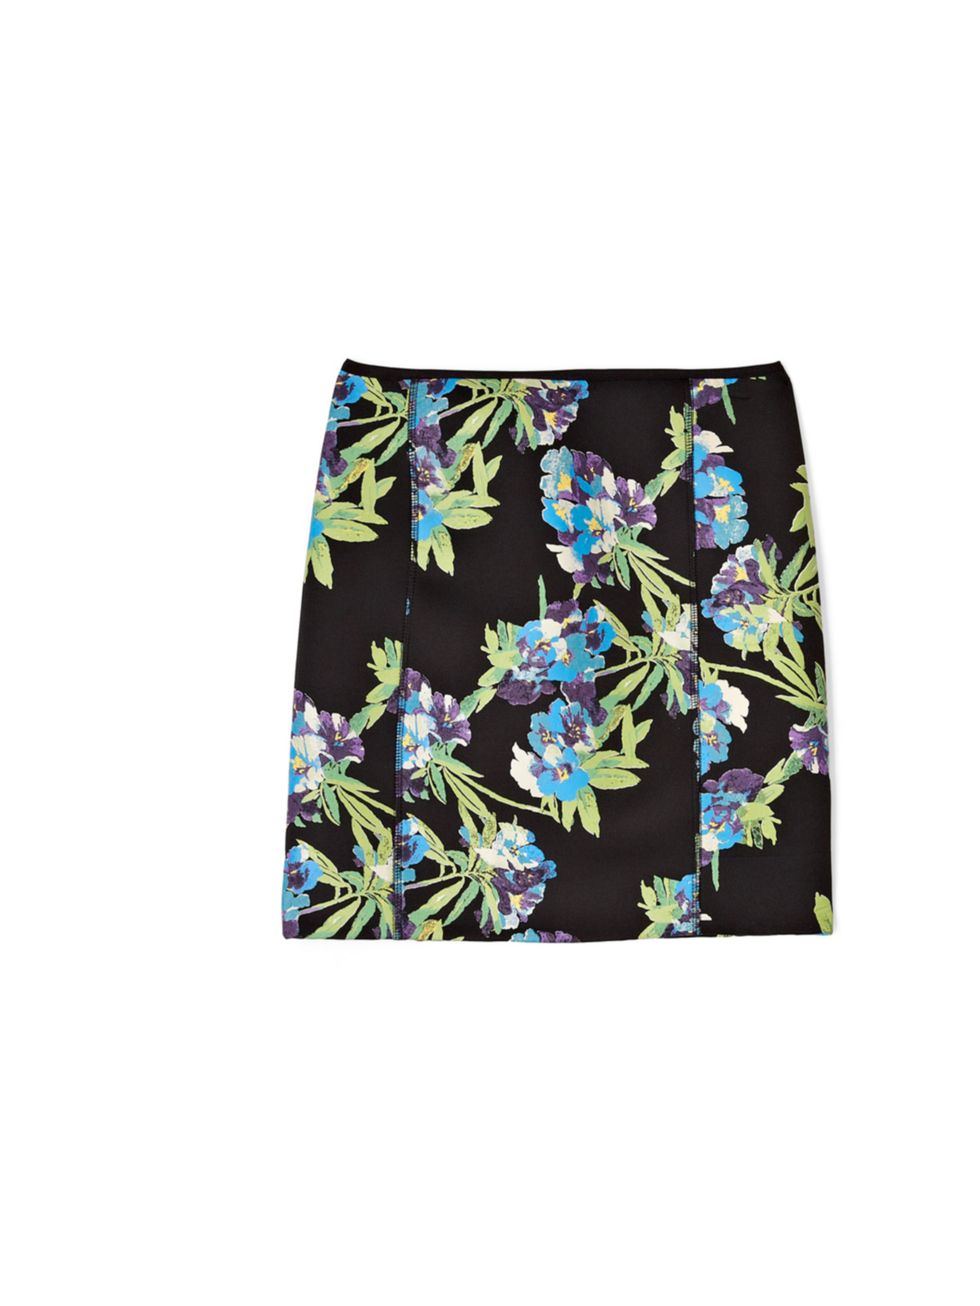 <p>Elizabeth &amp; James scuba floral skirt, £,275 at My-Wardrobe</p><p><a href="http://shopping.elleuk.com/browse?fts=elizabeth+%26+james+scuba+skirt">BUY NOW</a></p>